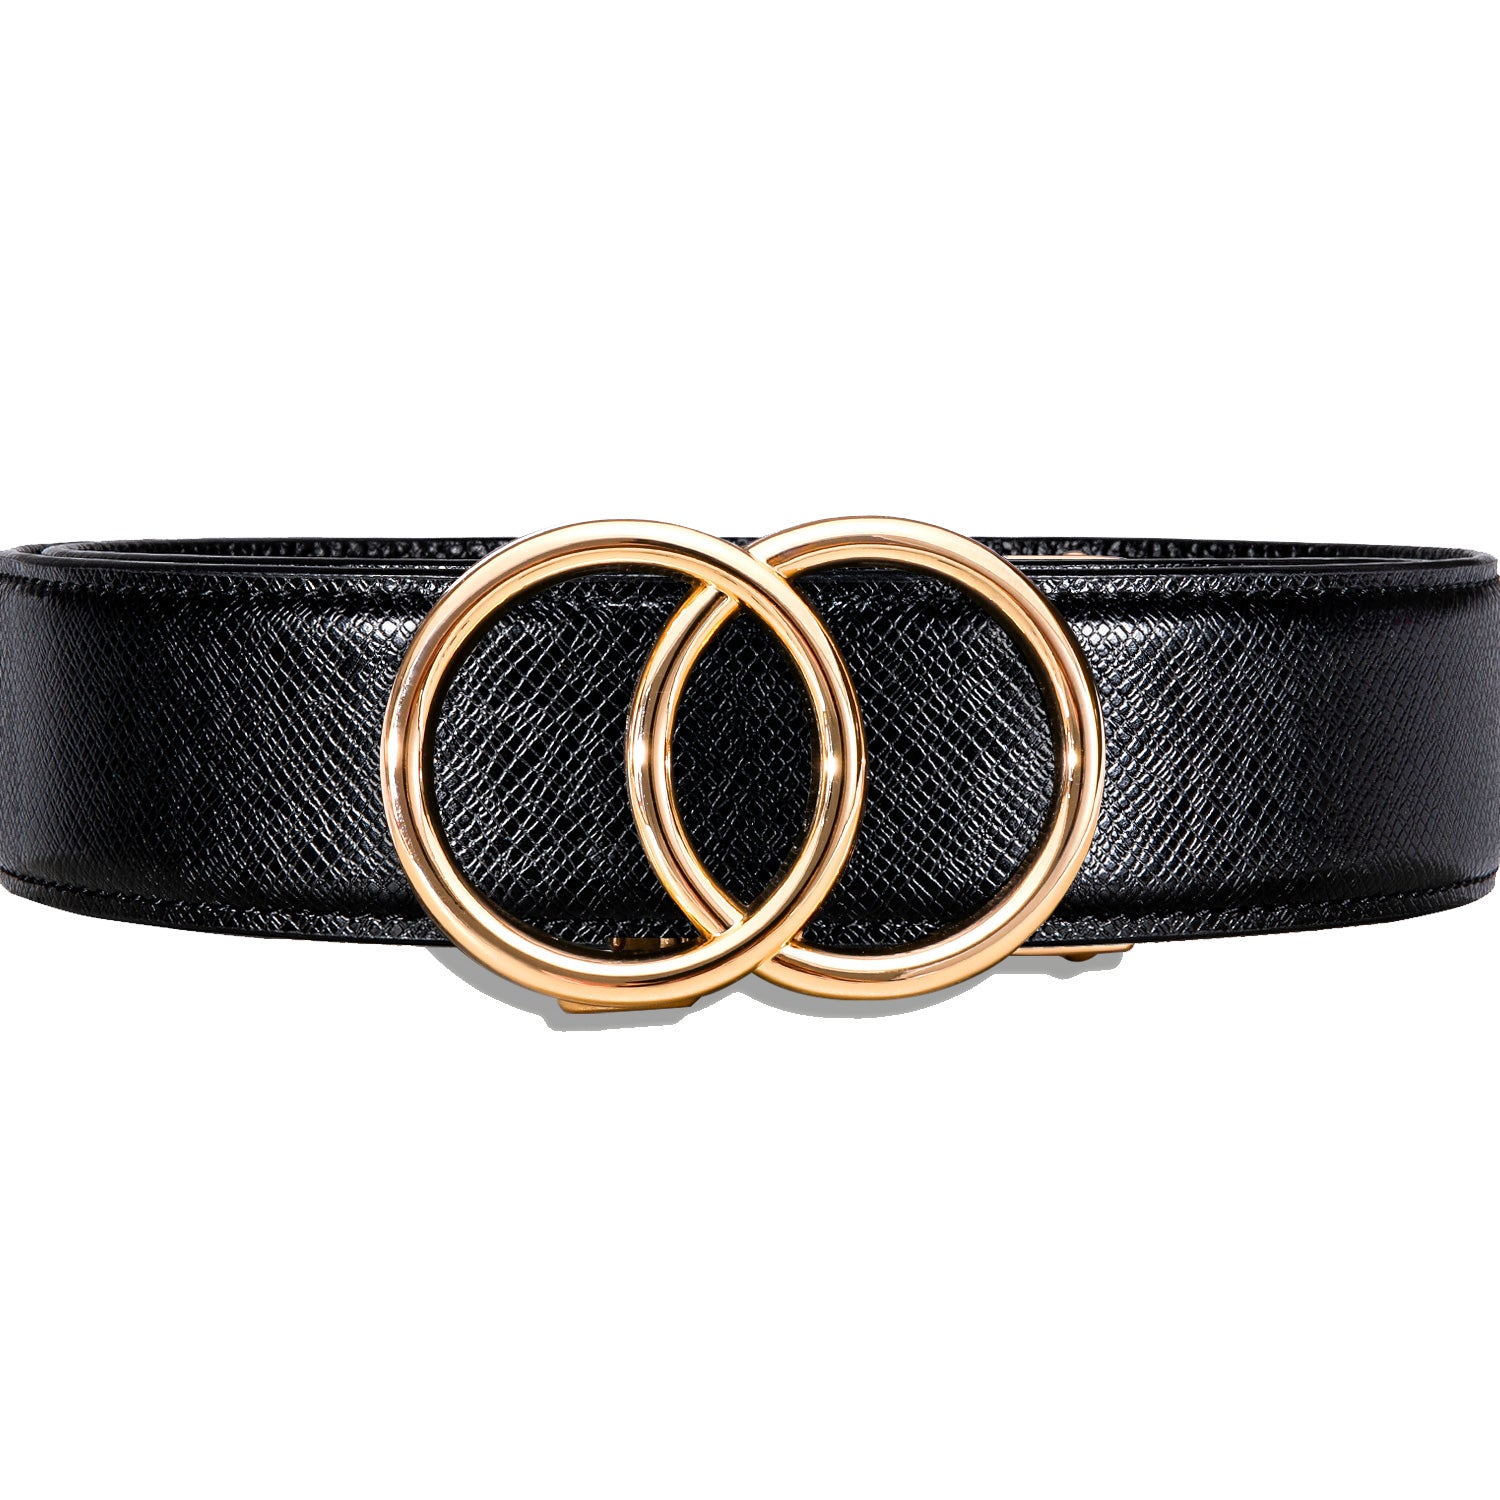 Barry.wang Men's Belt Metal Circle Buckle Genuine Leather Belt 110cm-160cm